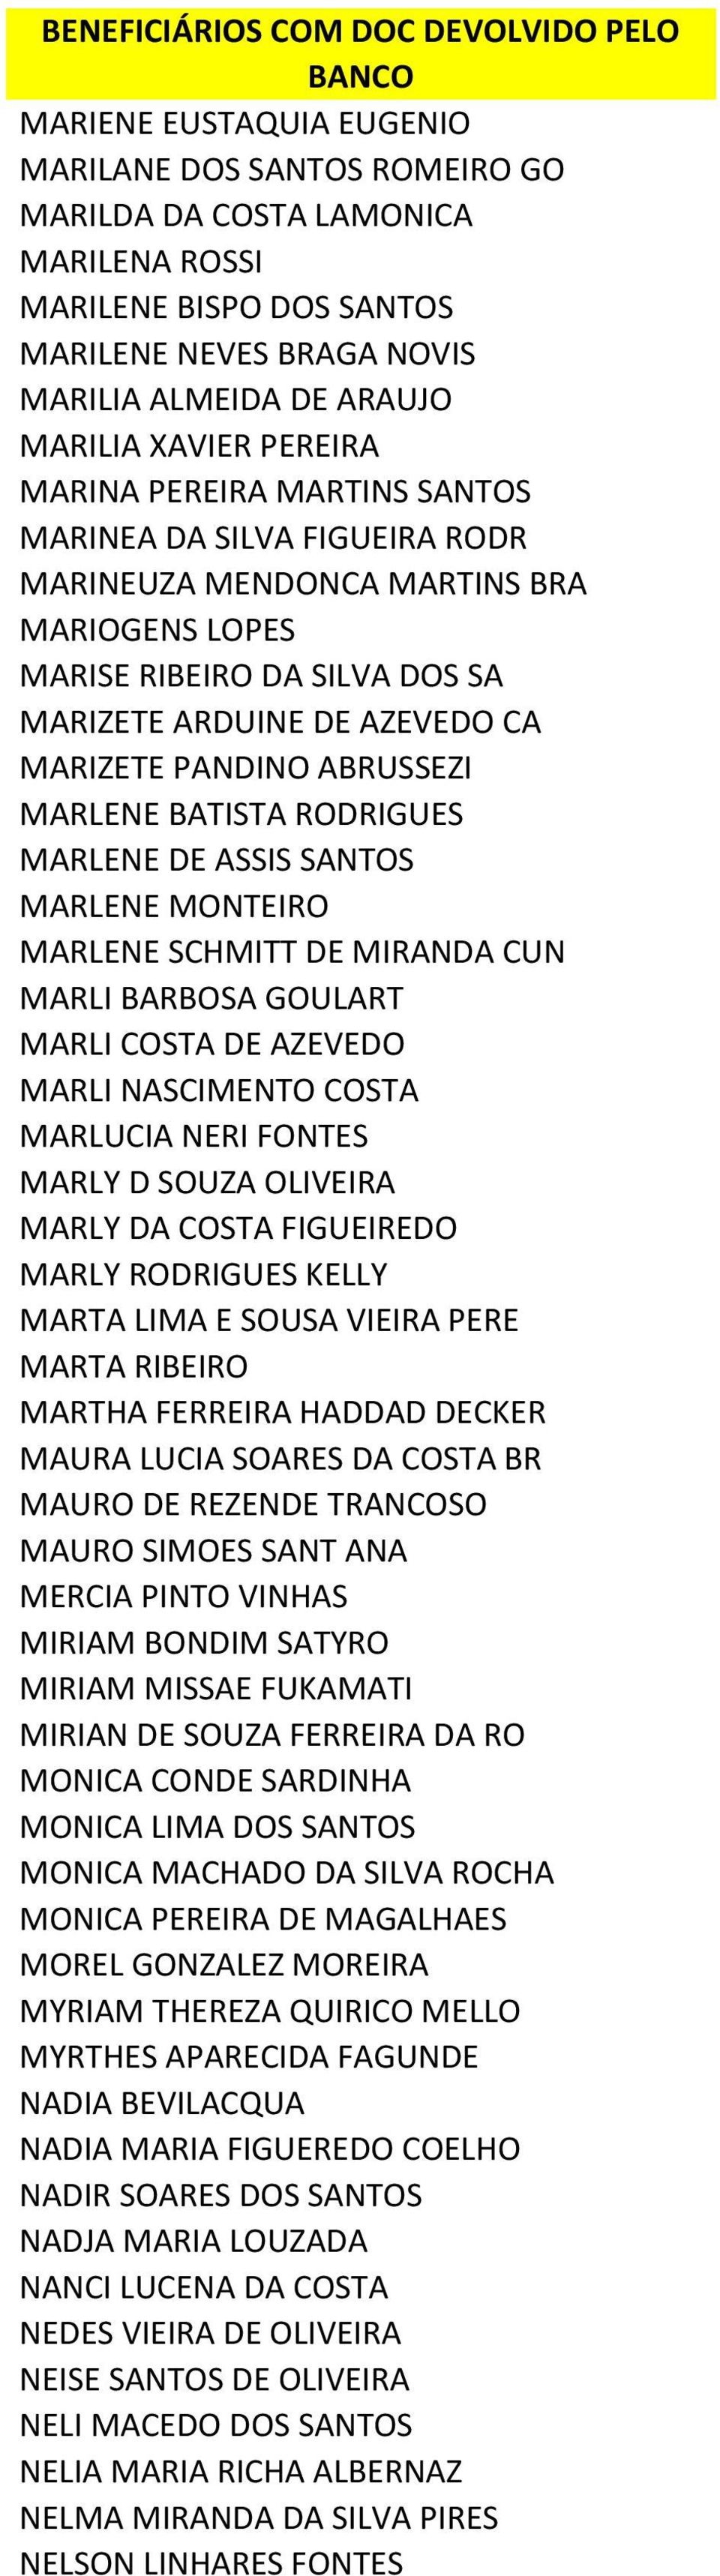 MARLENE BATISTA RODRIGUES MARLENE DE ASSIS SANTOS MARLENE MONTEIRO MARLENE SCHMITT DE MIRANDA CUN MARLI BARBOSA GOULART MARLI COSTA DE AZEVEDO MARLI NASCIMENTO COSTA MARLUCIA NERI FONTES MARLY D